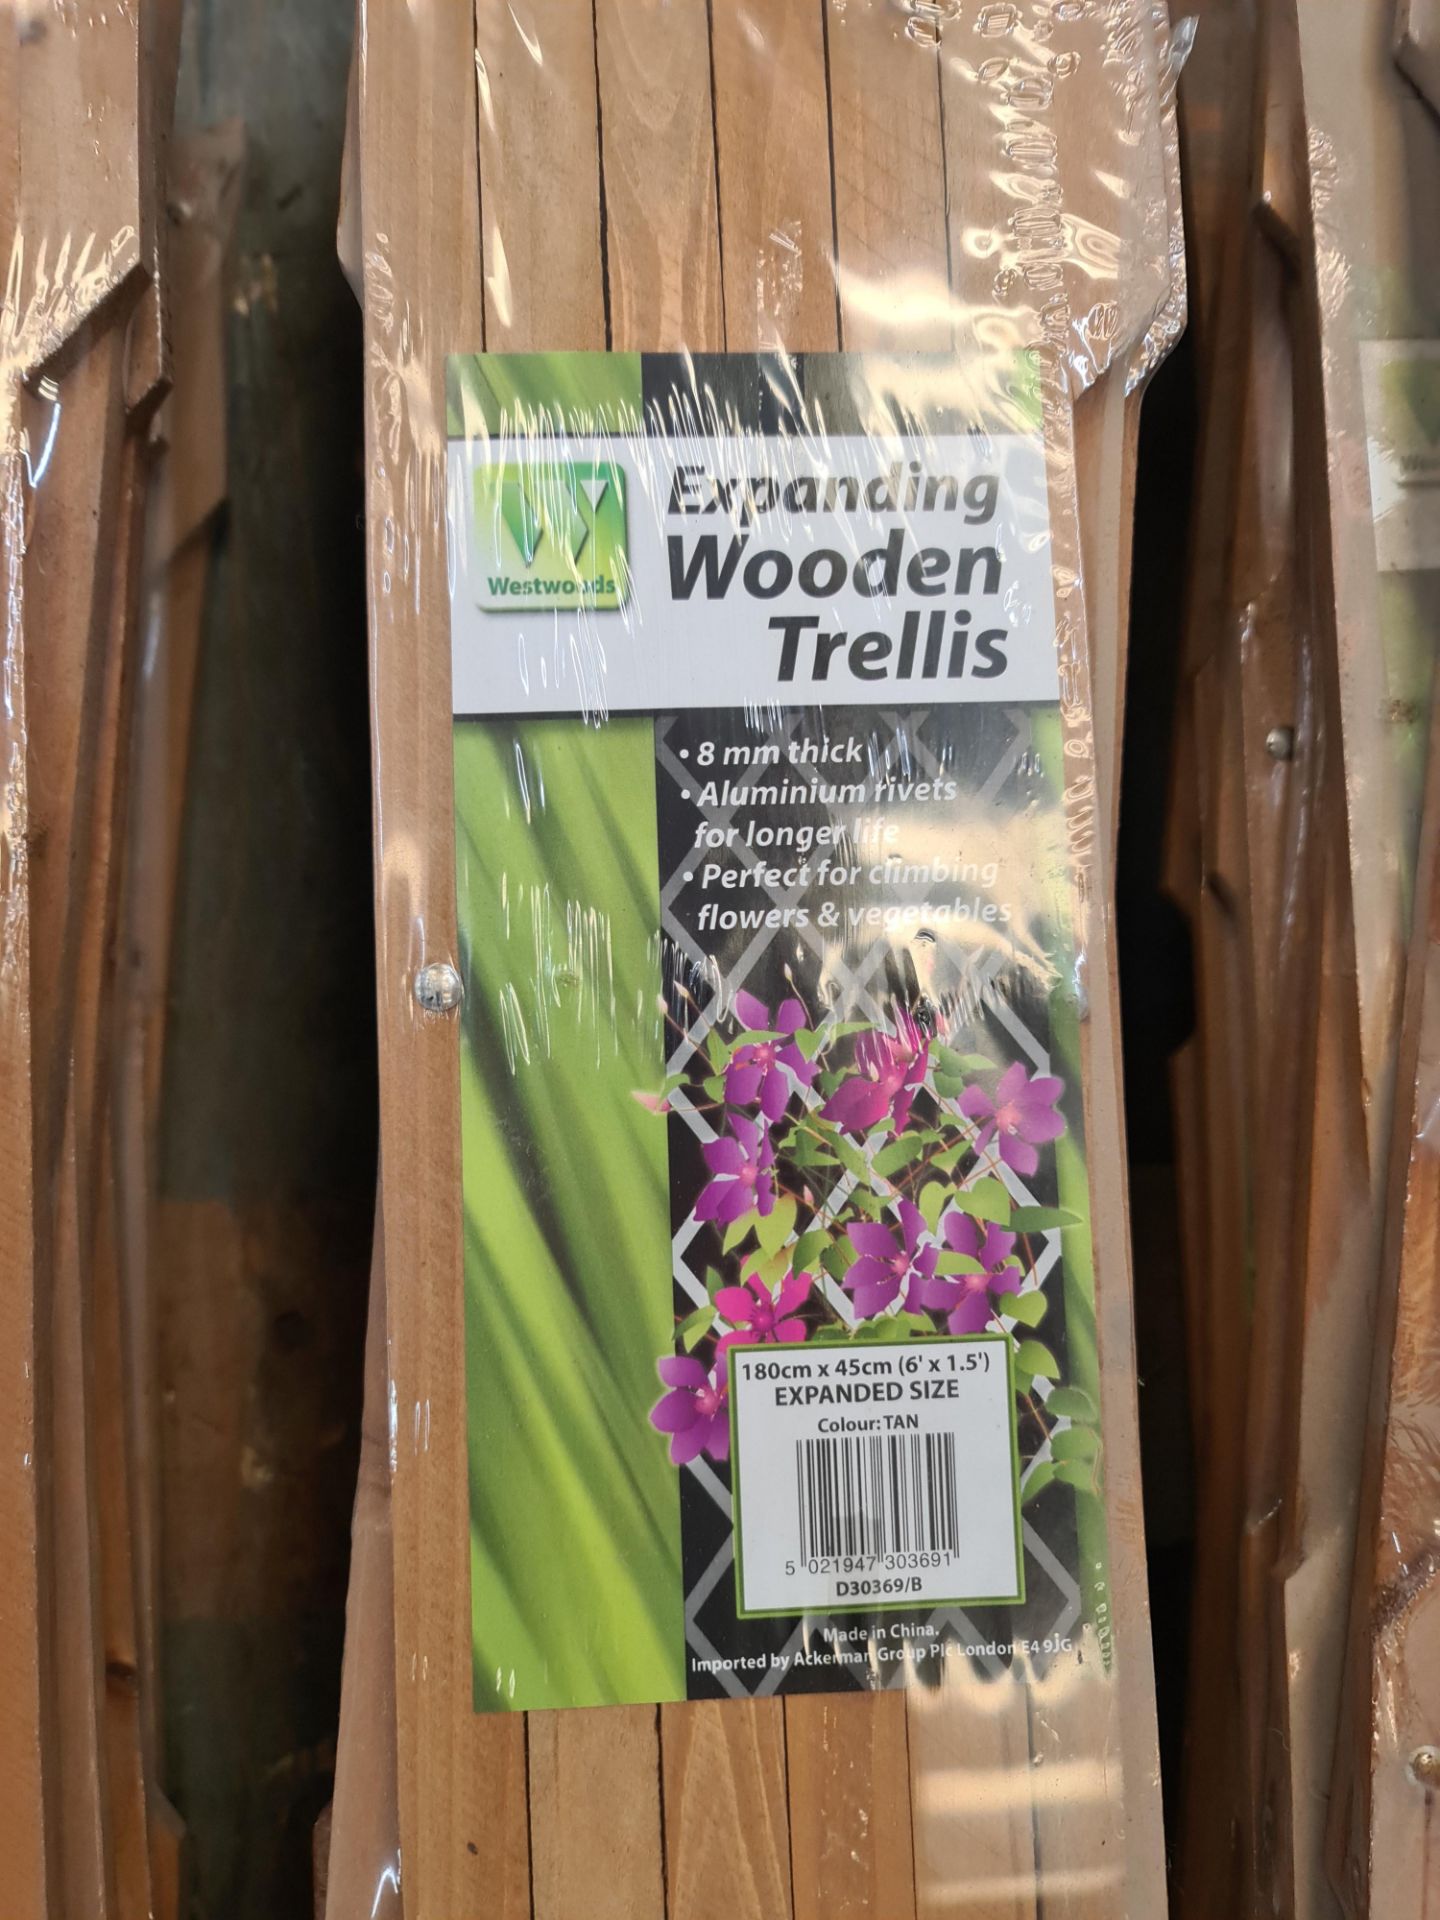 20 expanding wooden trellis - Image 2 of 3